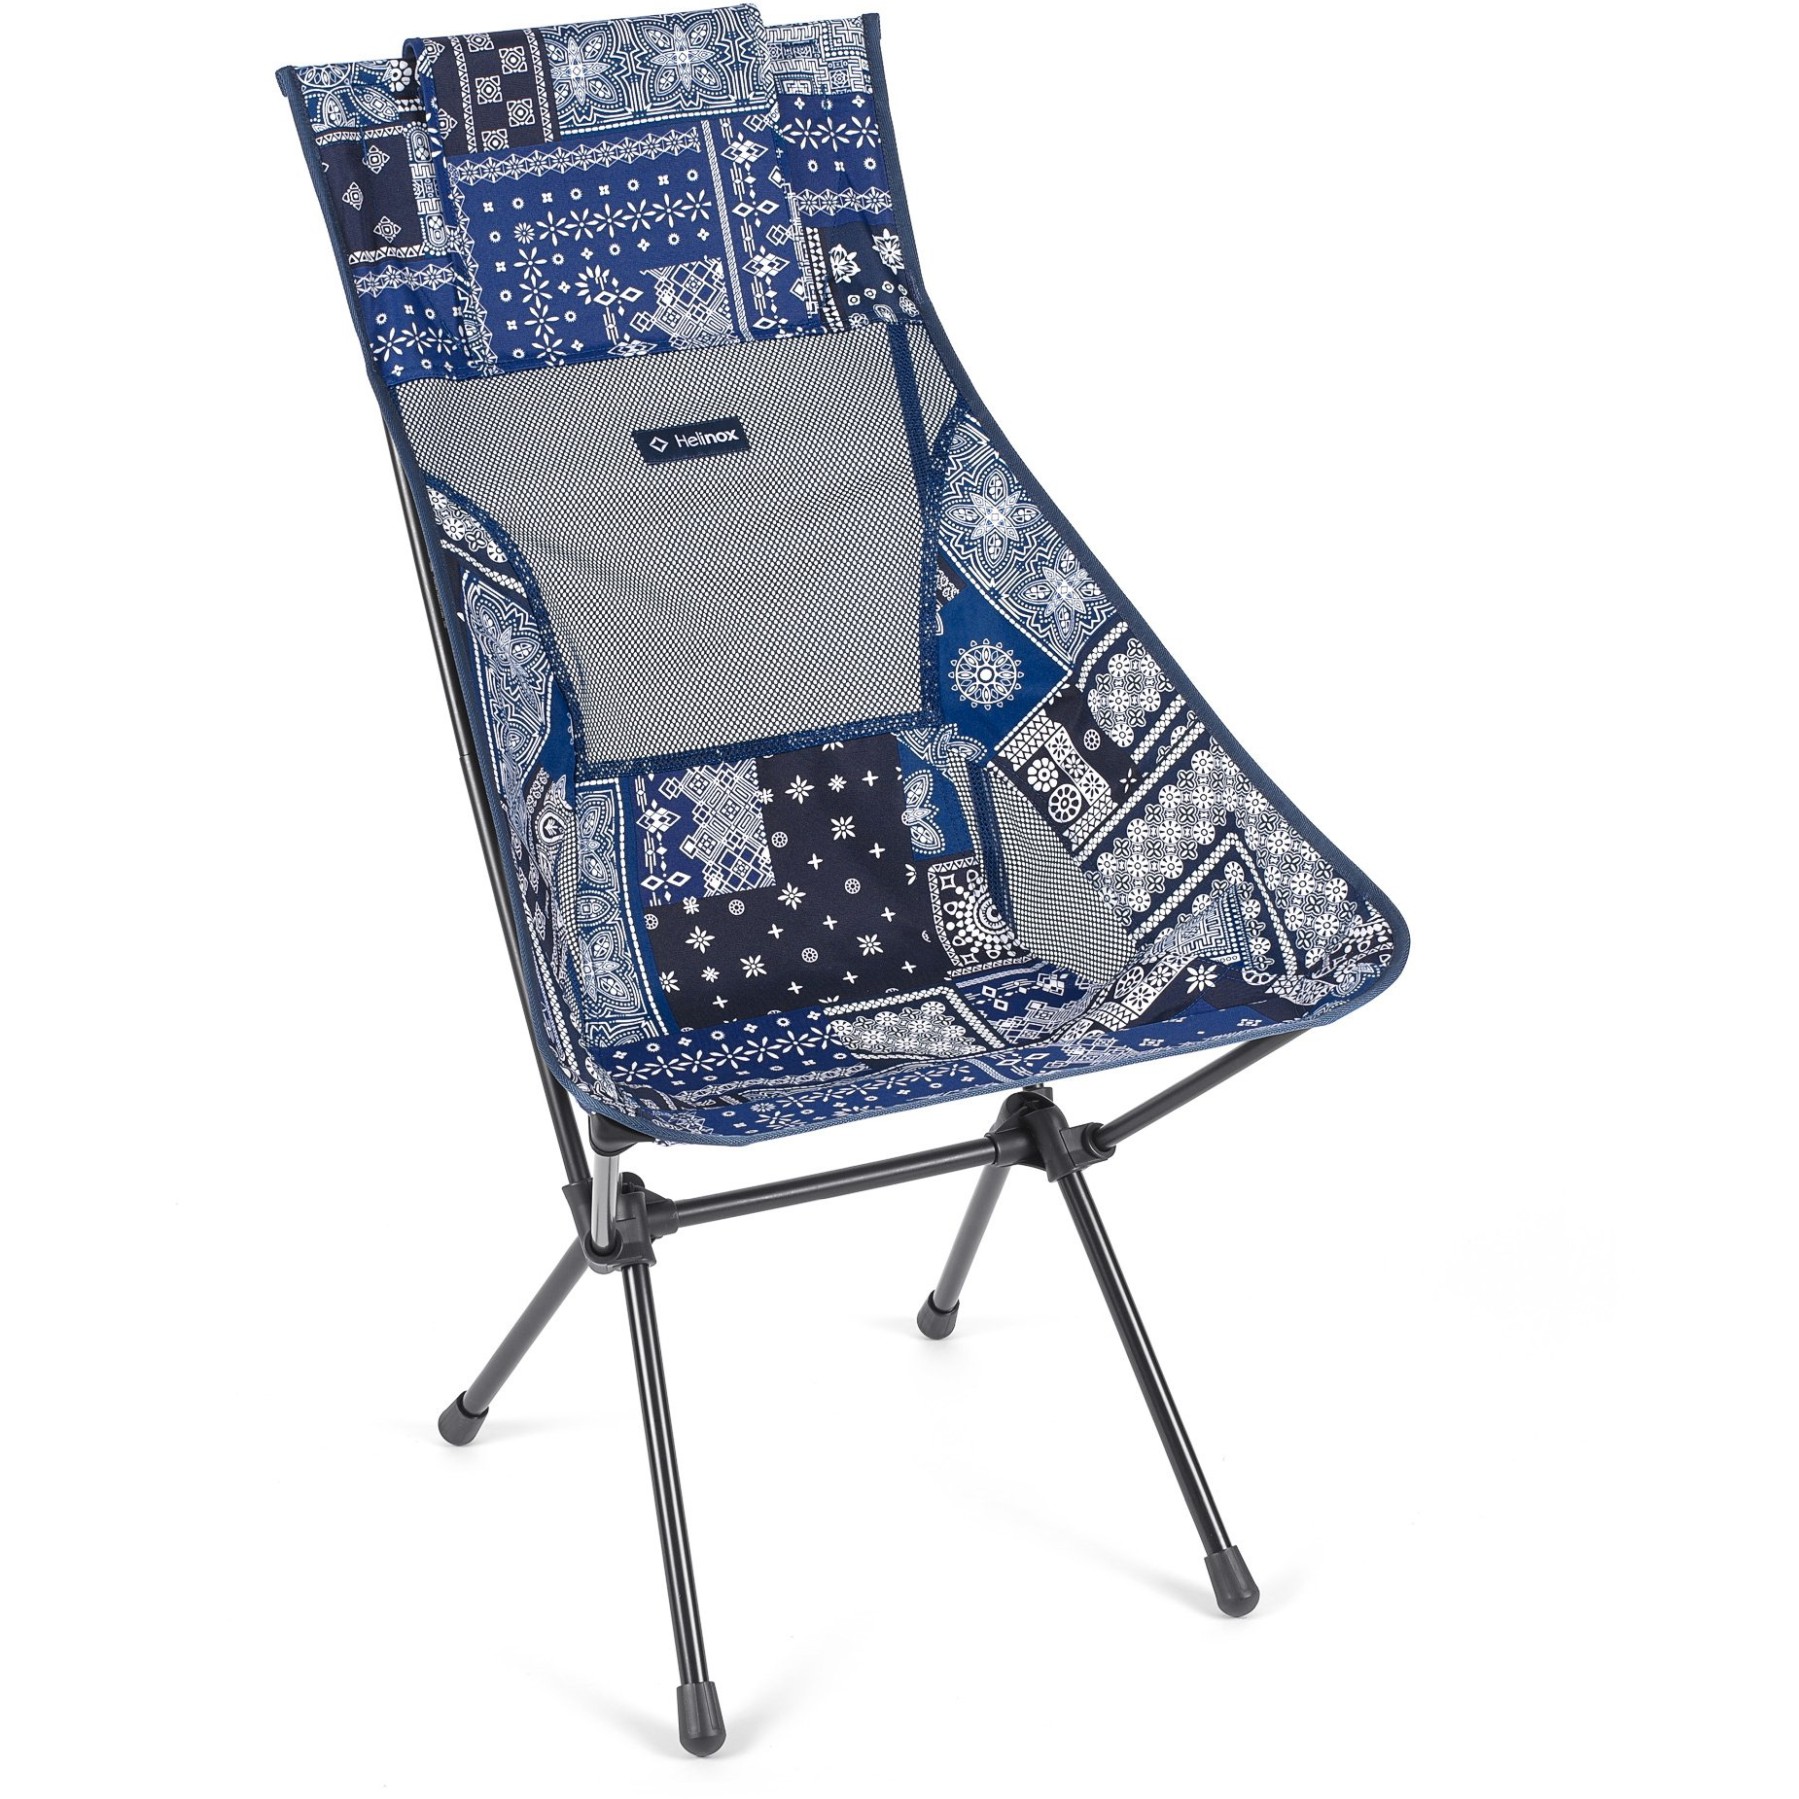 Productfoto van Helinox Sunset Chair - Campingstoel - Blue Bandanna Quilt / Zwart